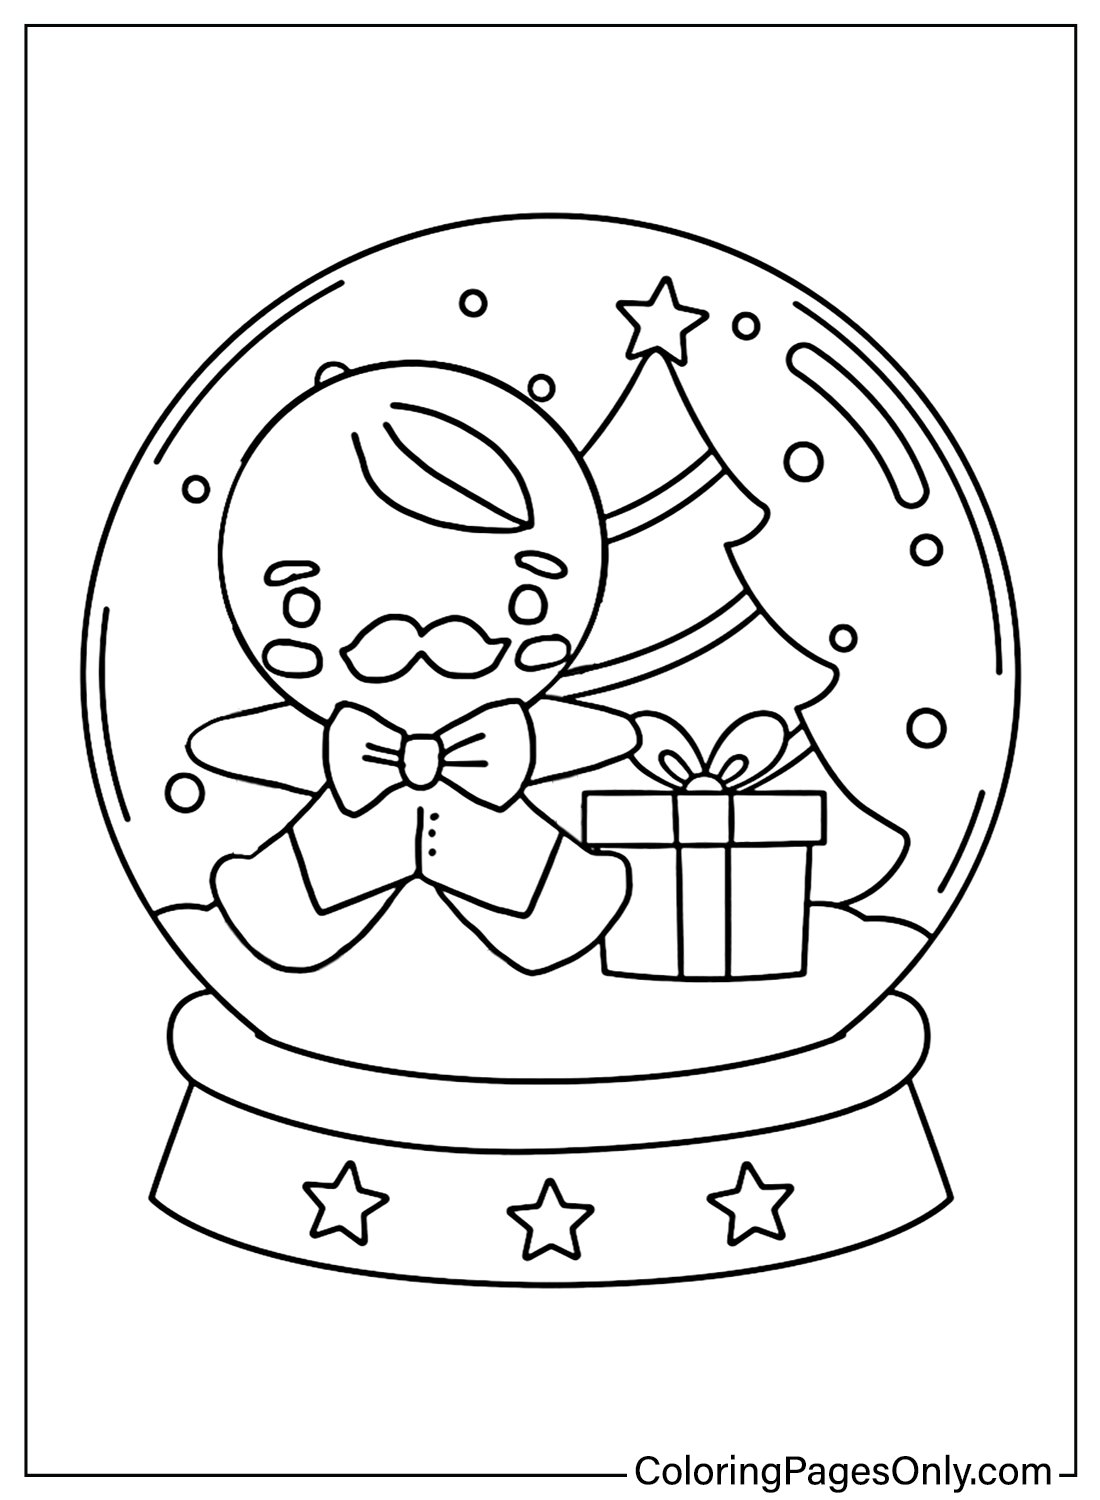 Página para colorir do globo de neve Gingerbread Man de Gingerbread Man